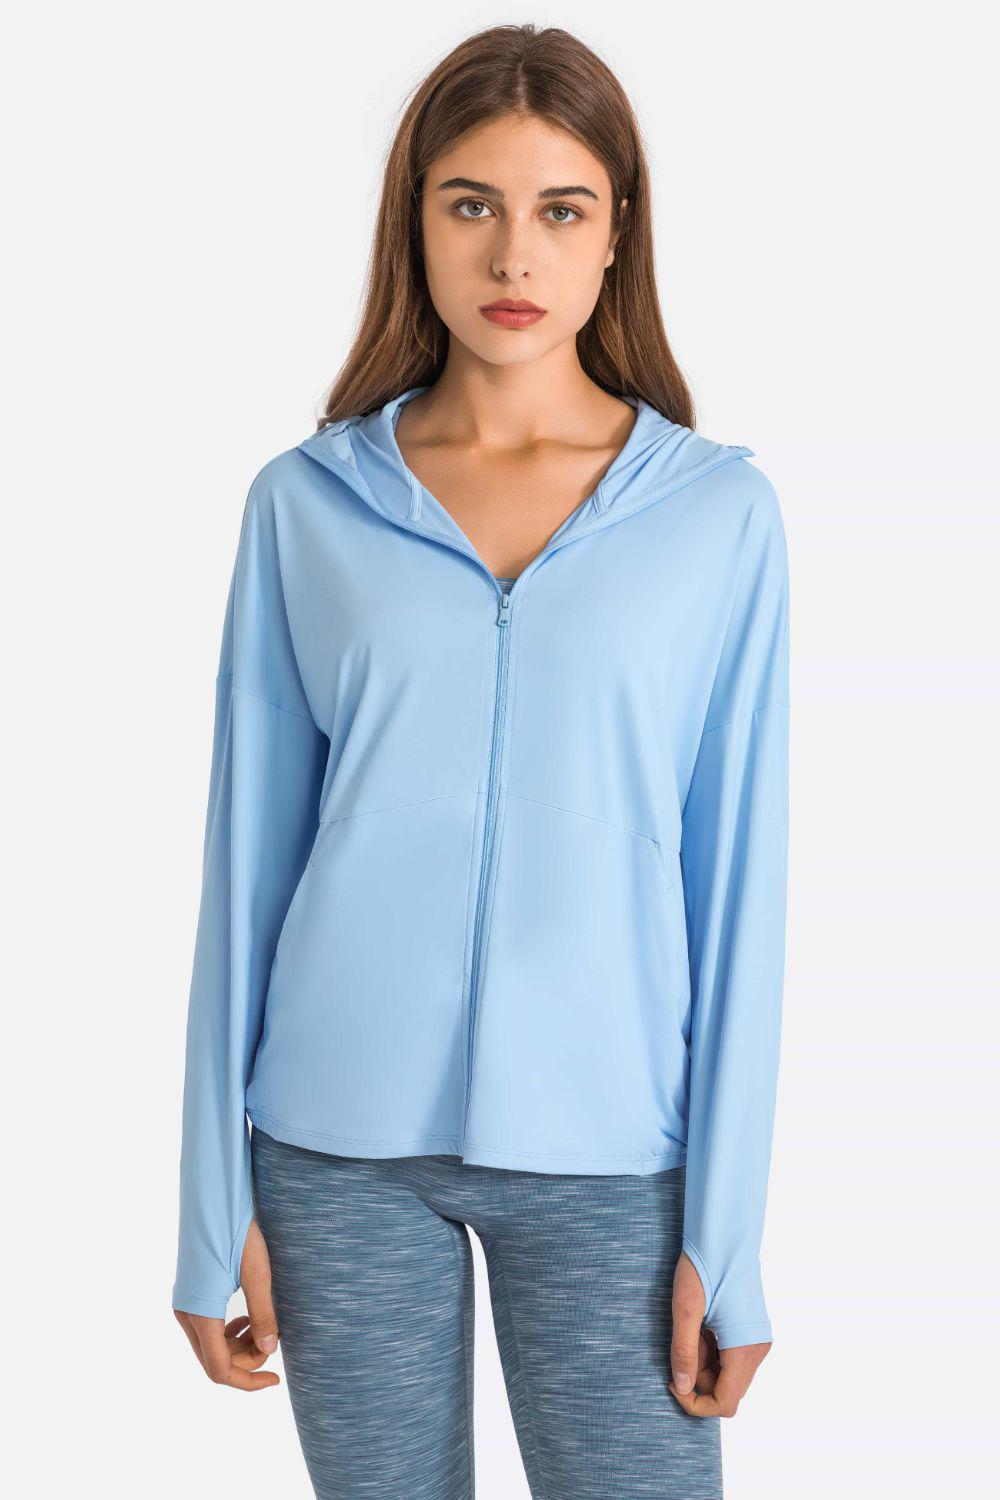 Zip Up Dropped Shoulder Hooded Sports Jacket-TOPS / DRESSES-[Adult]-[Female]-Blue-S-2022 Online Blue Zone Planet